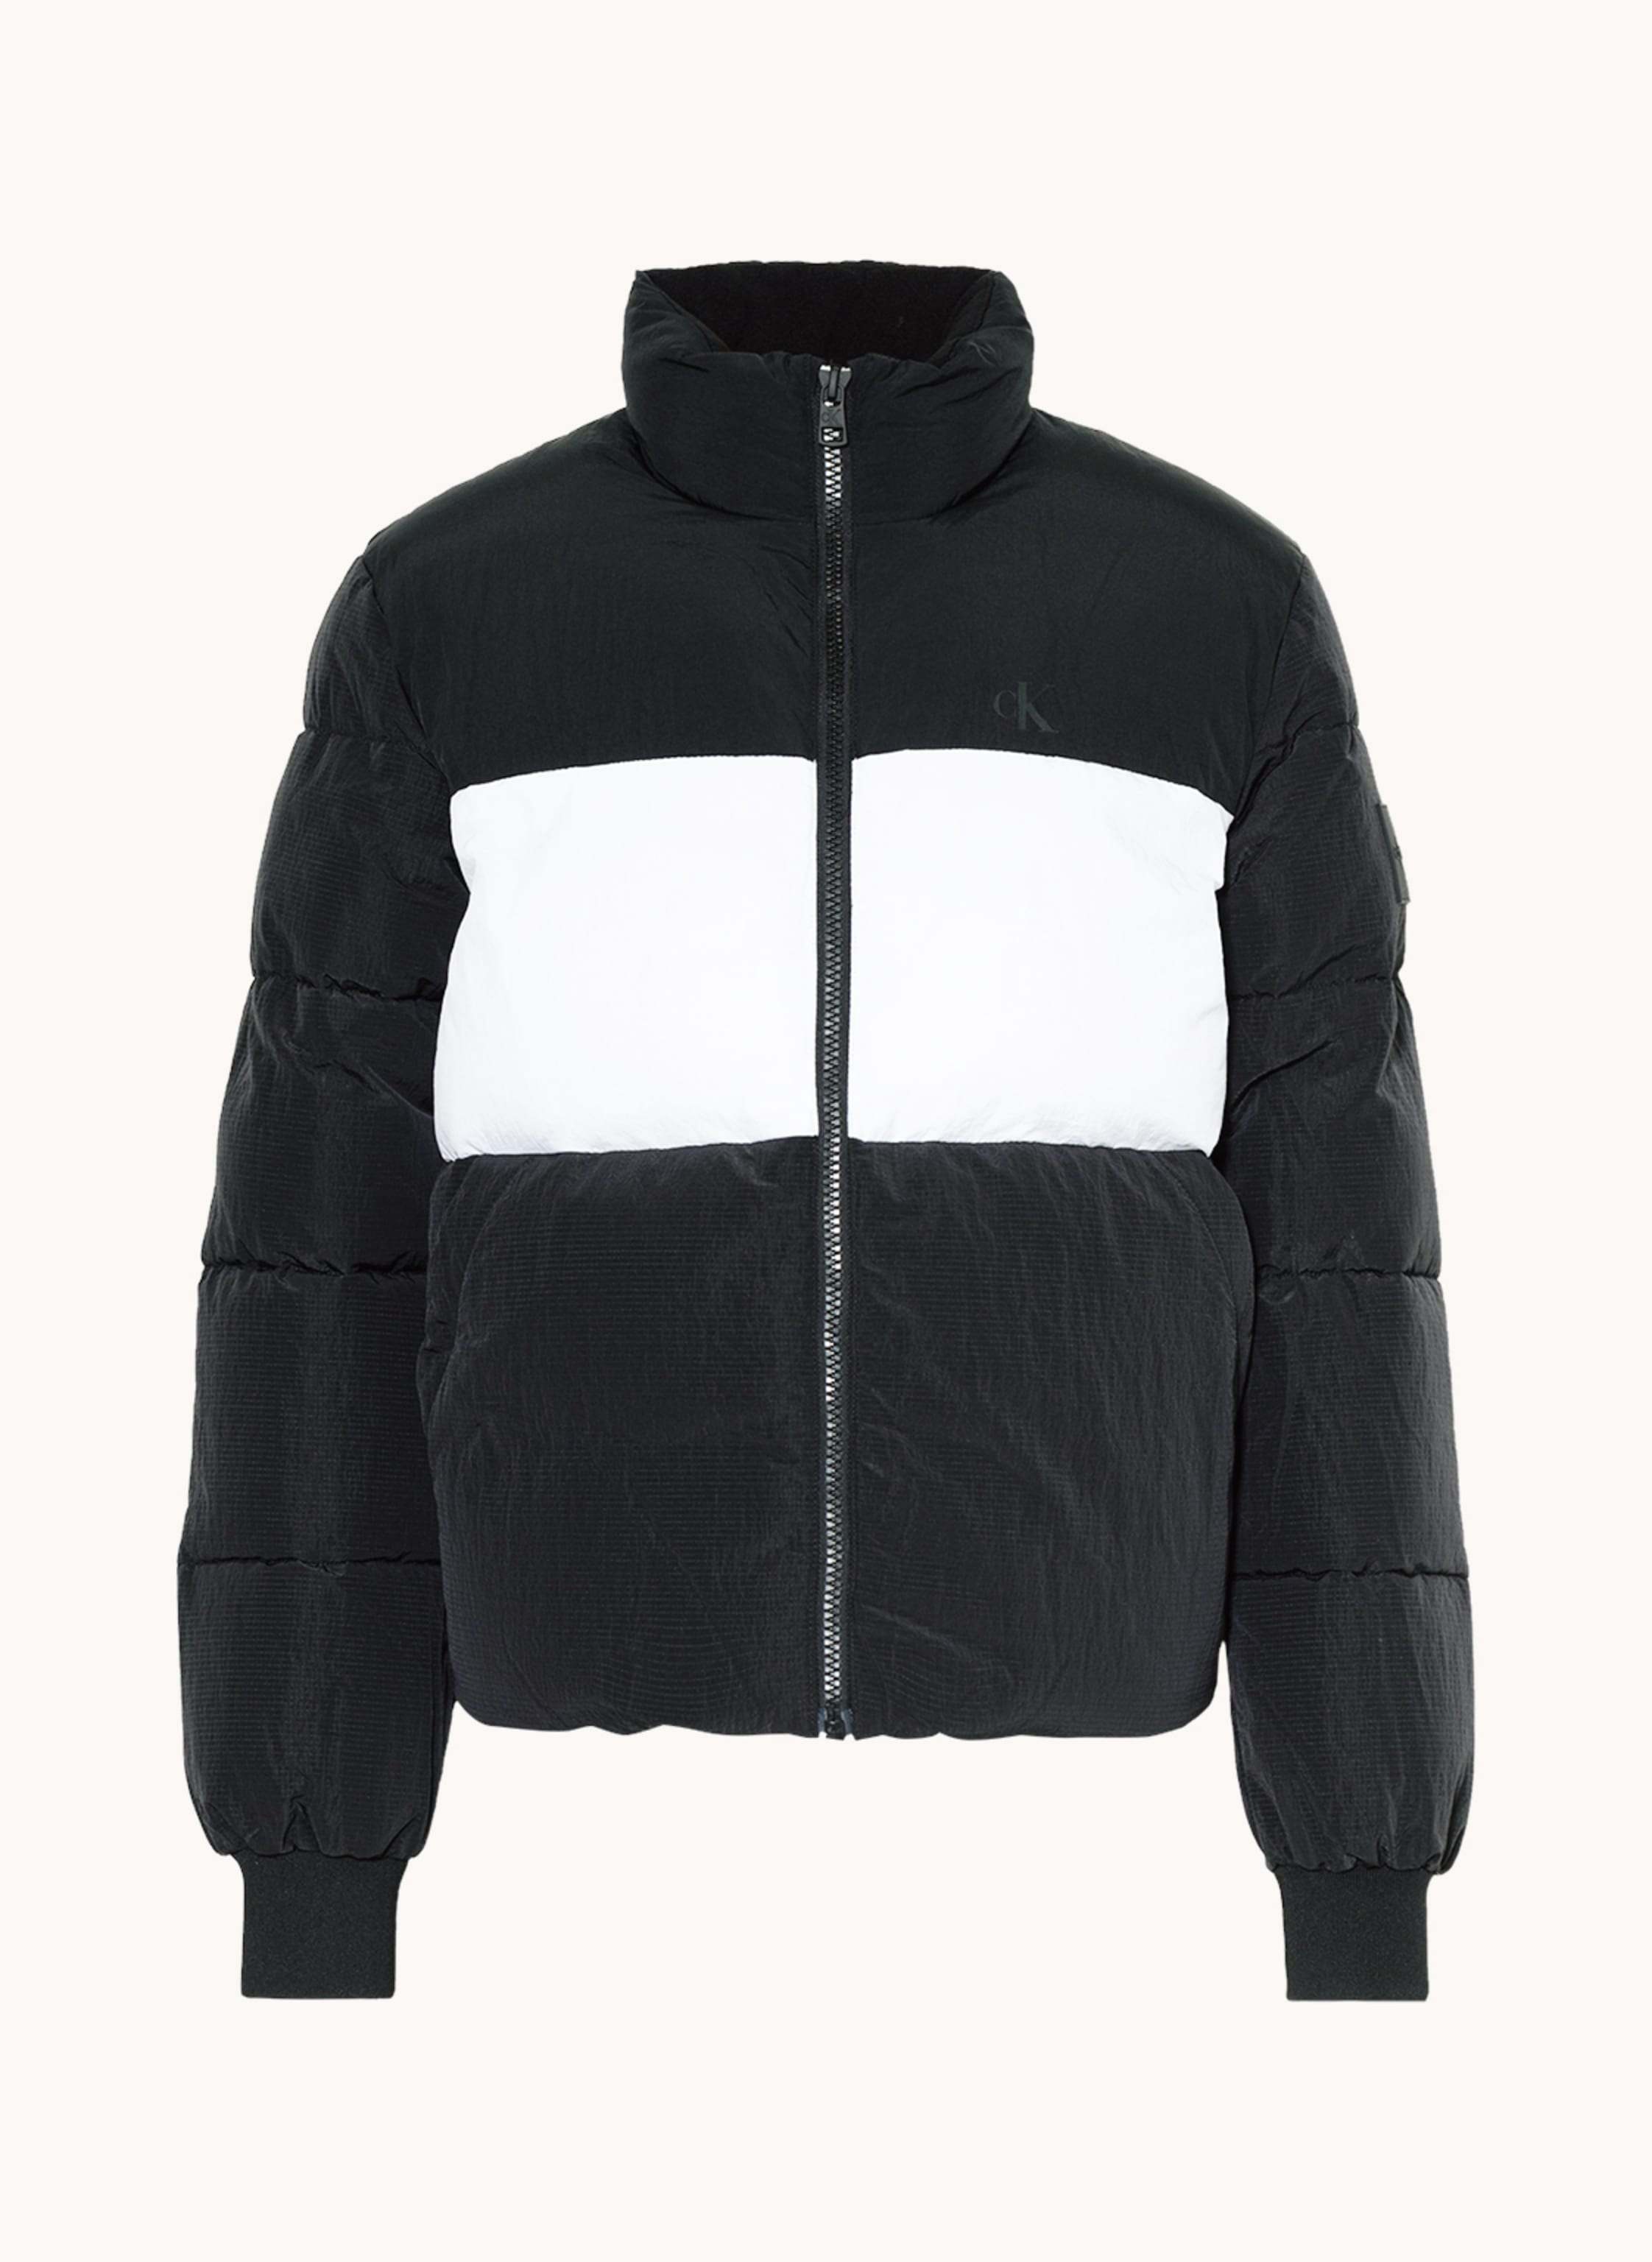 Calvin Klein Jeans Quilted jacket in black/ white | Breuninger